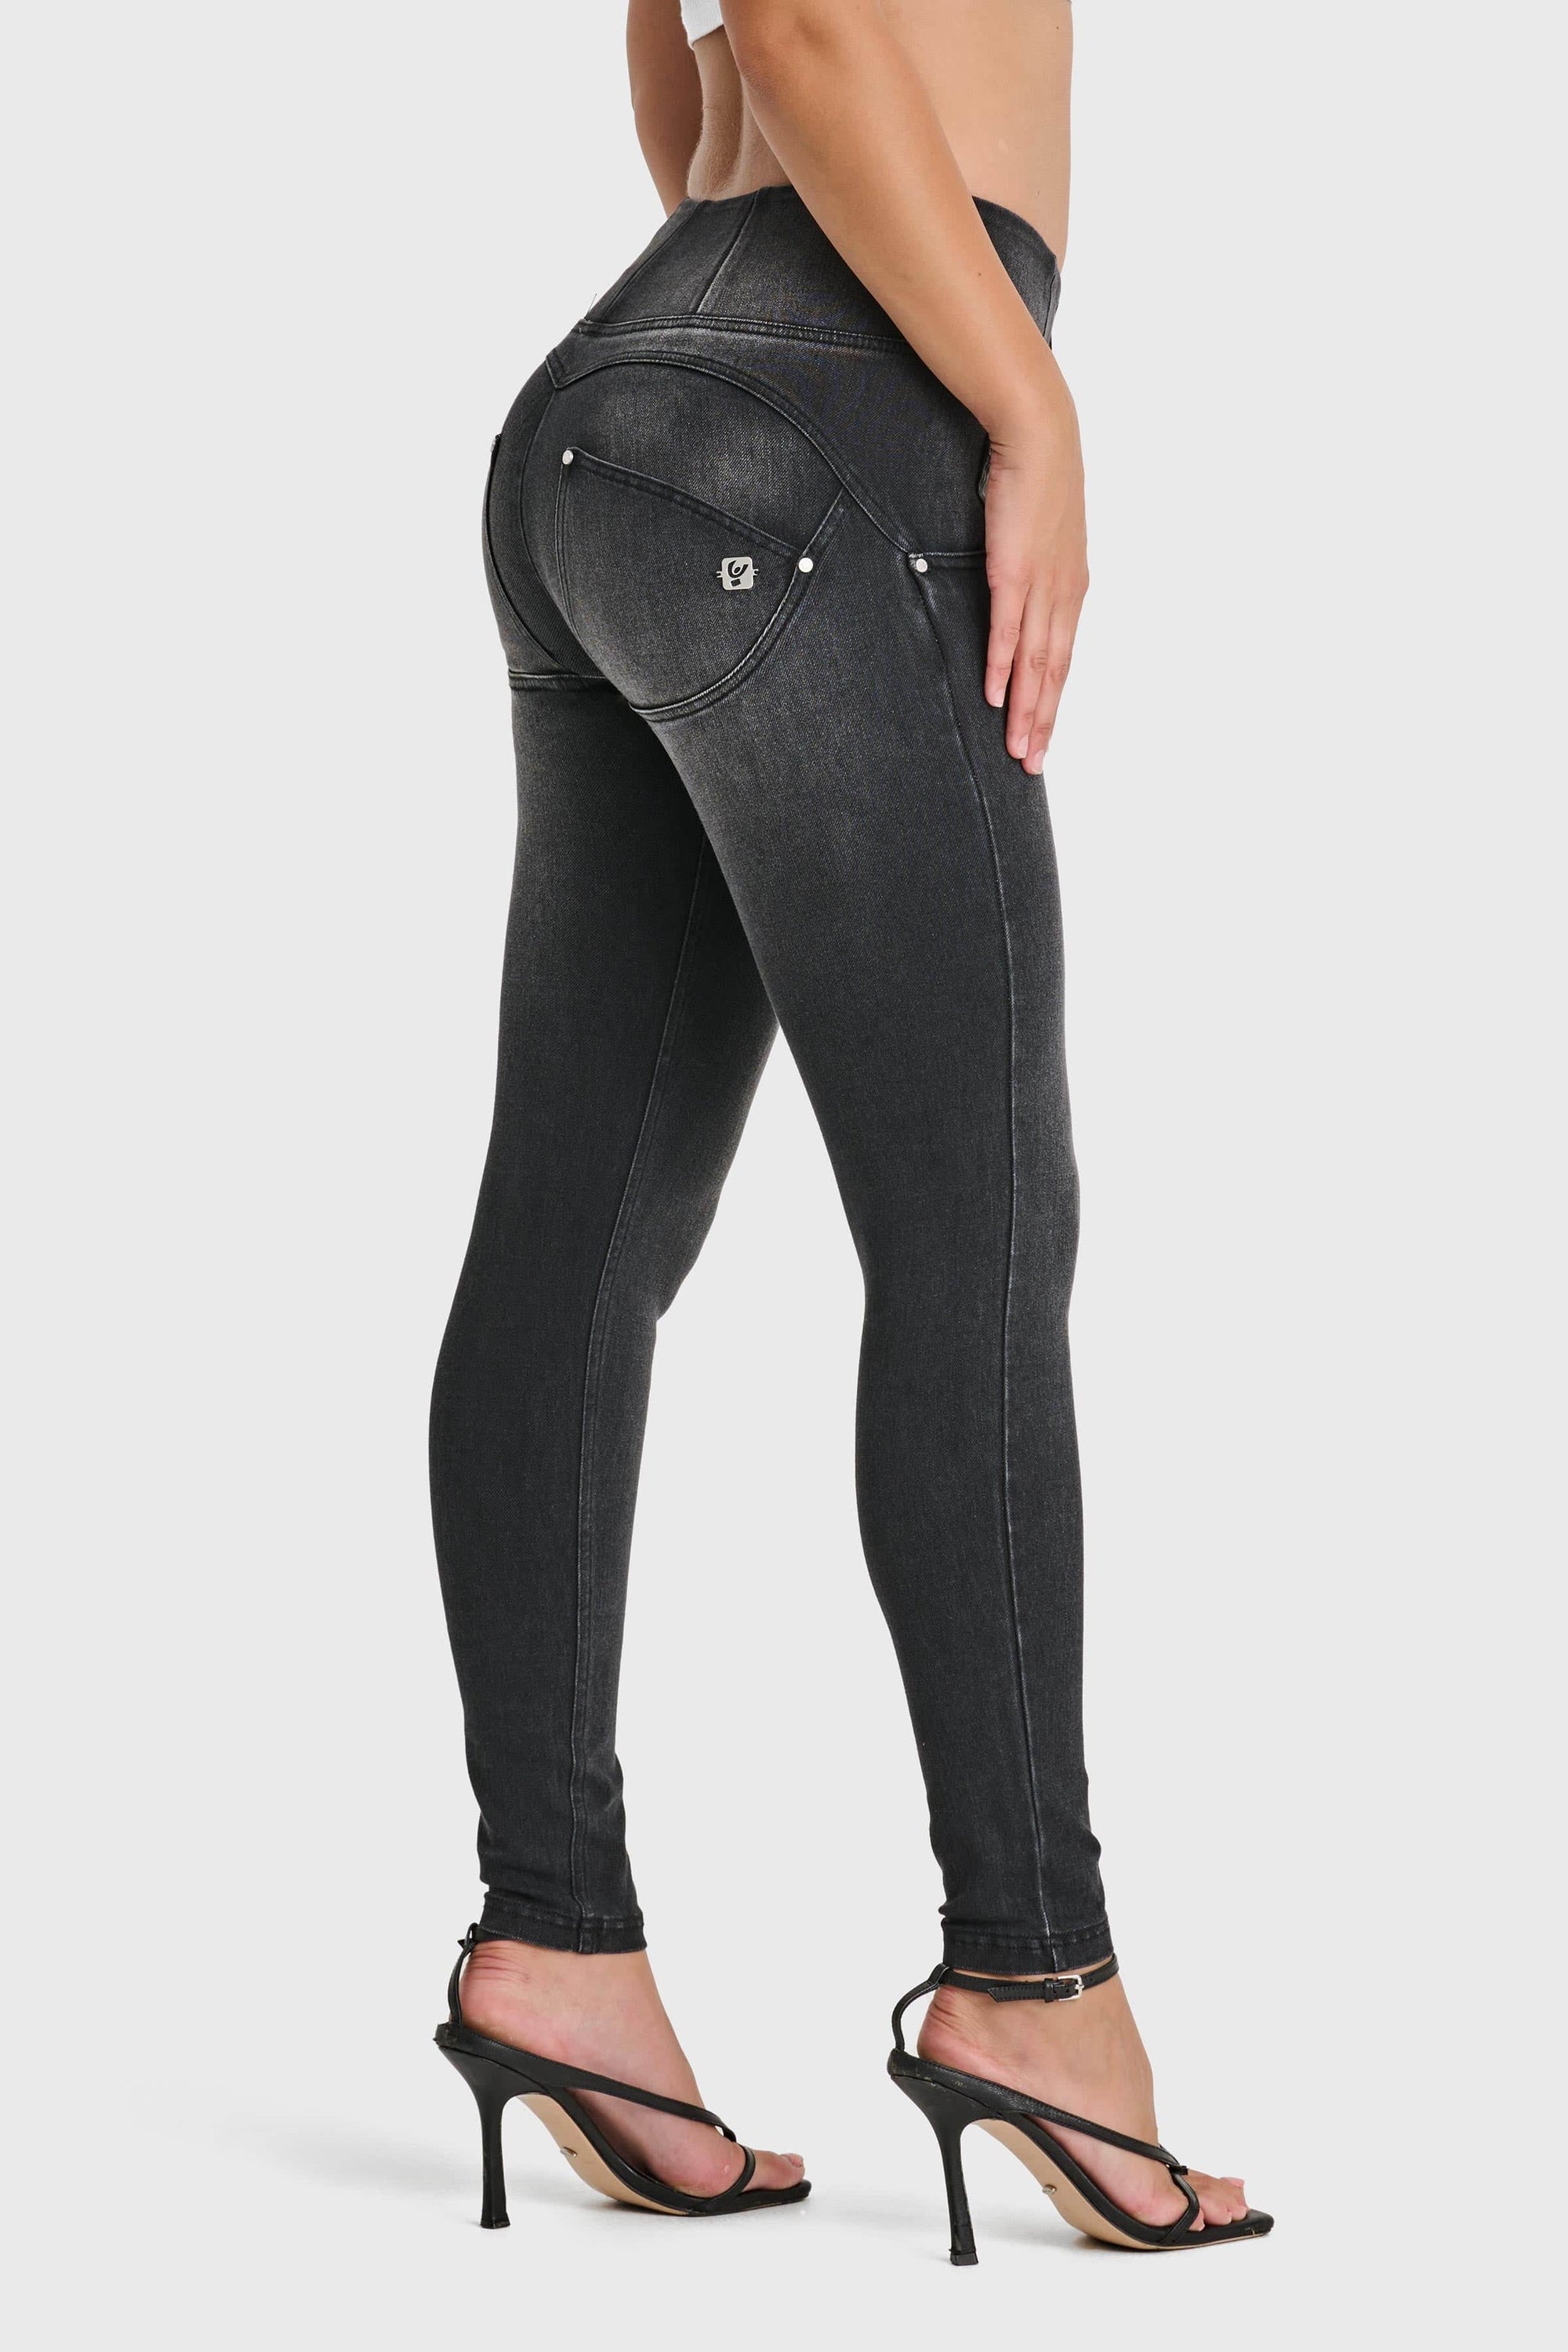 WR.UP® Snug Jeans - High Waisted - Full Length - Black + Black Stitching 2